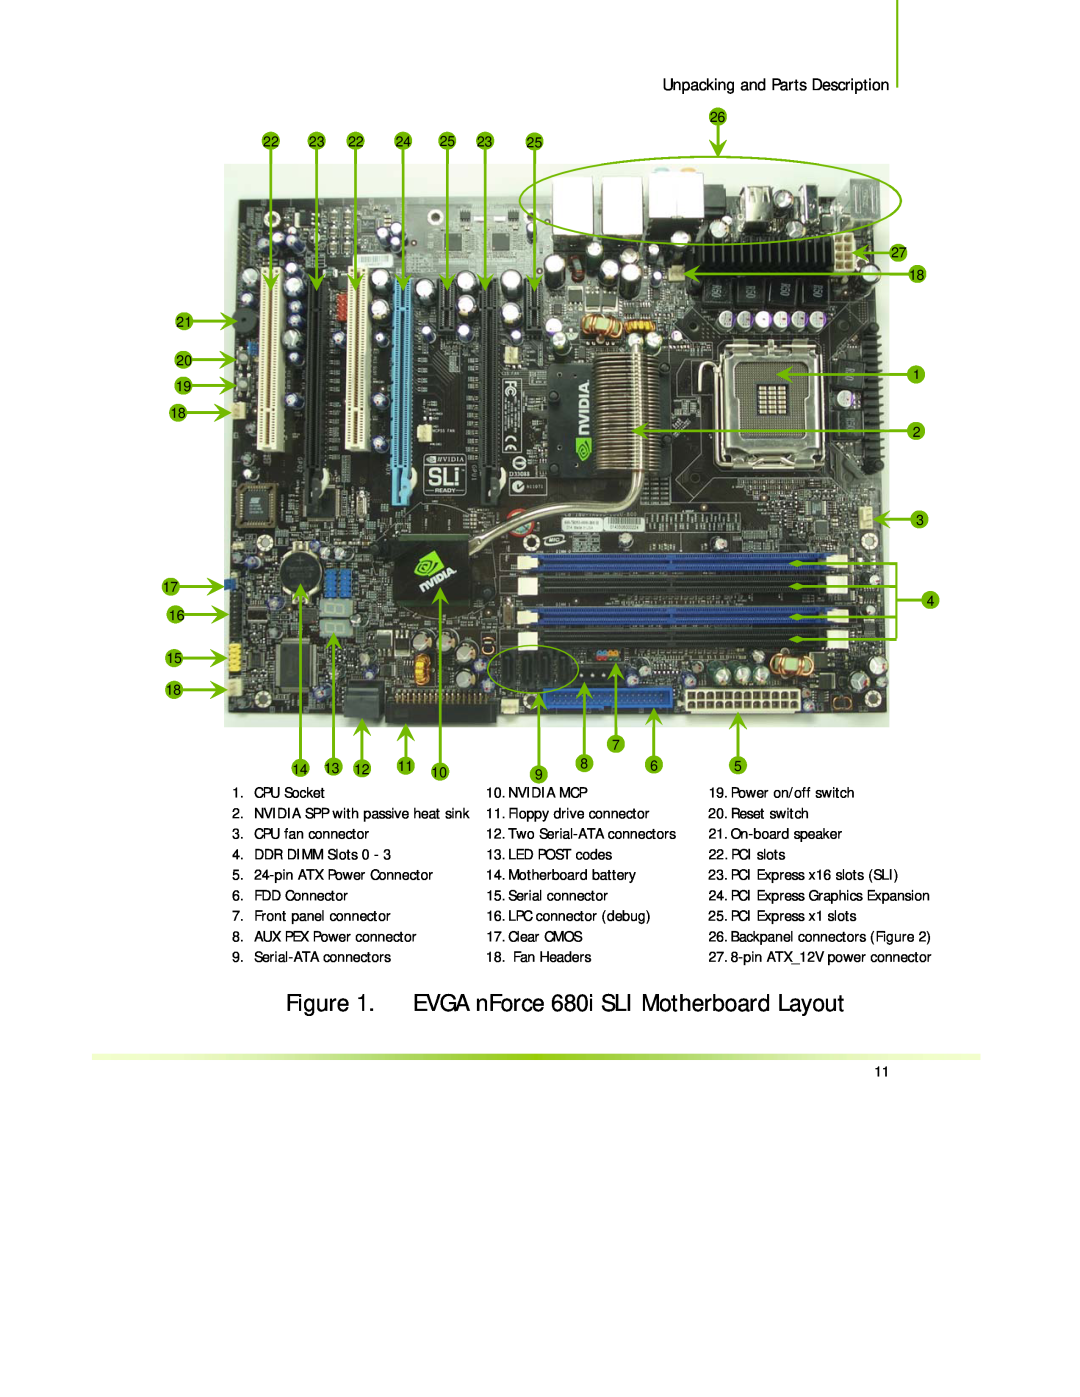 EVGA 122-CK-NF68-XX manual EVGA nForce 680i SLI Motherboard Layout, Unpacking and Parts Description 